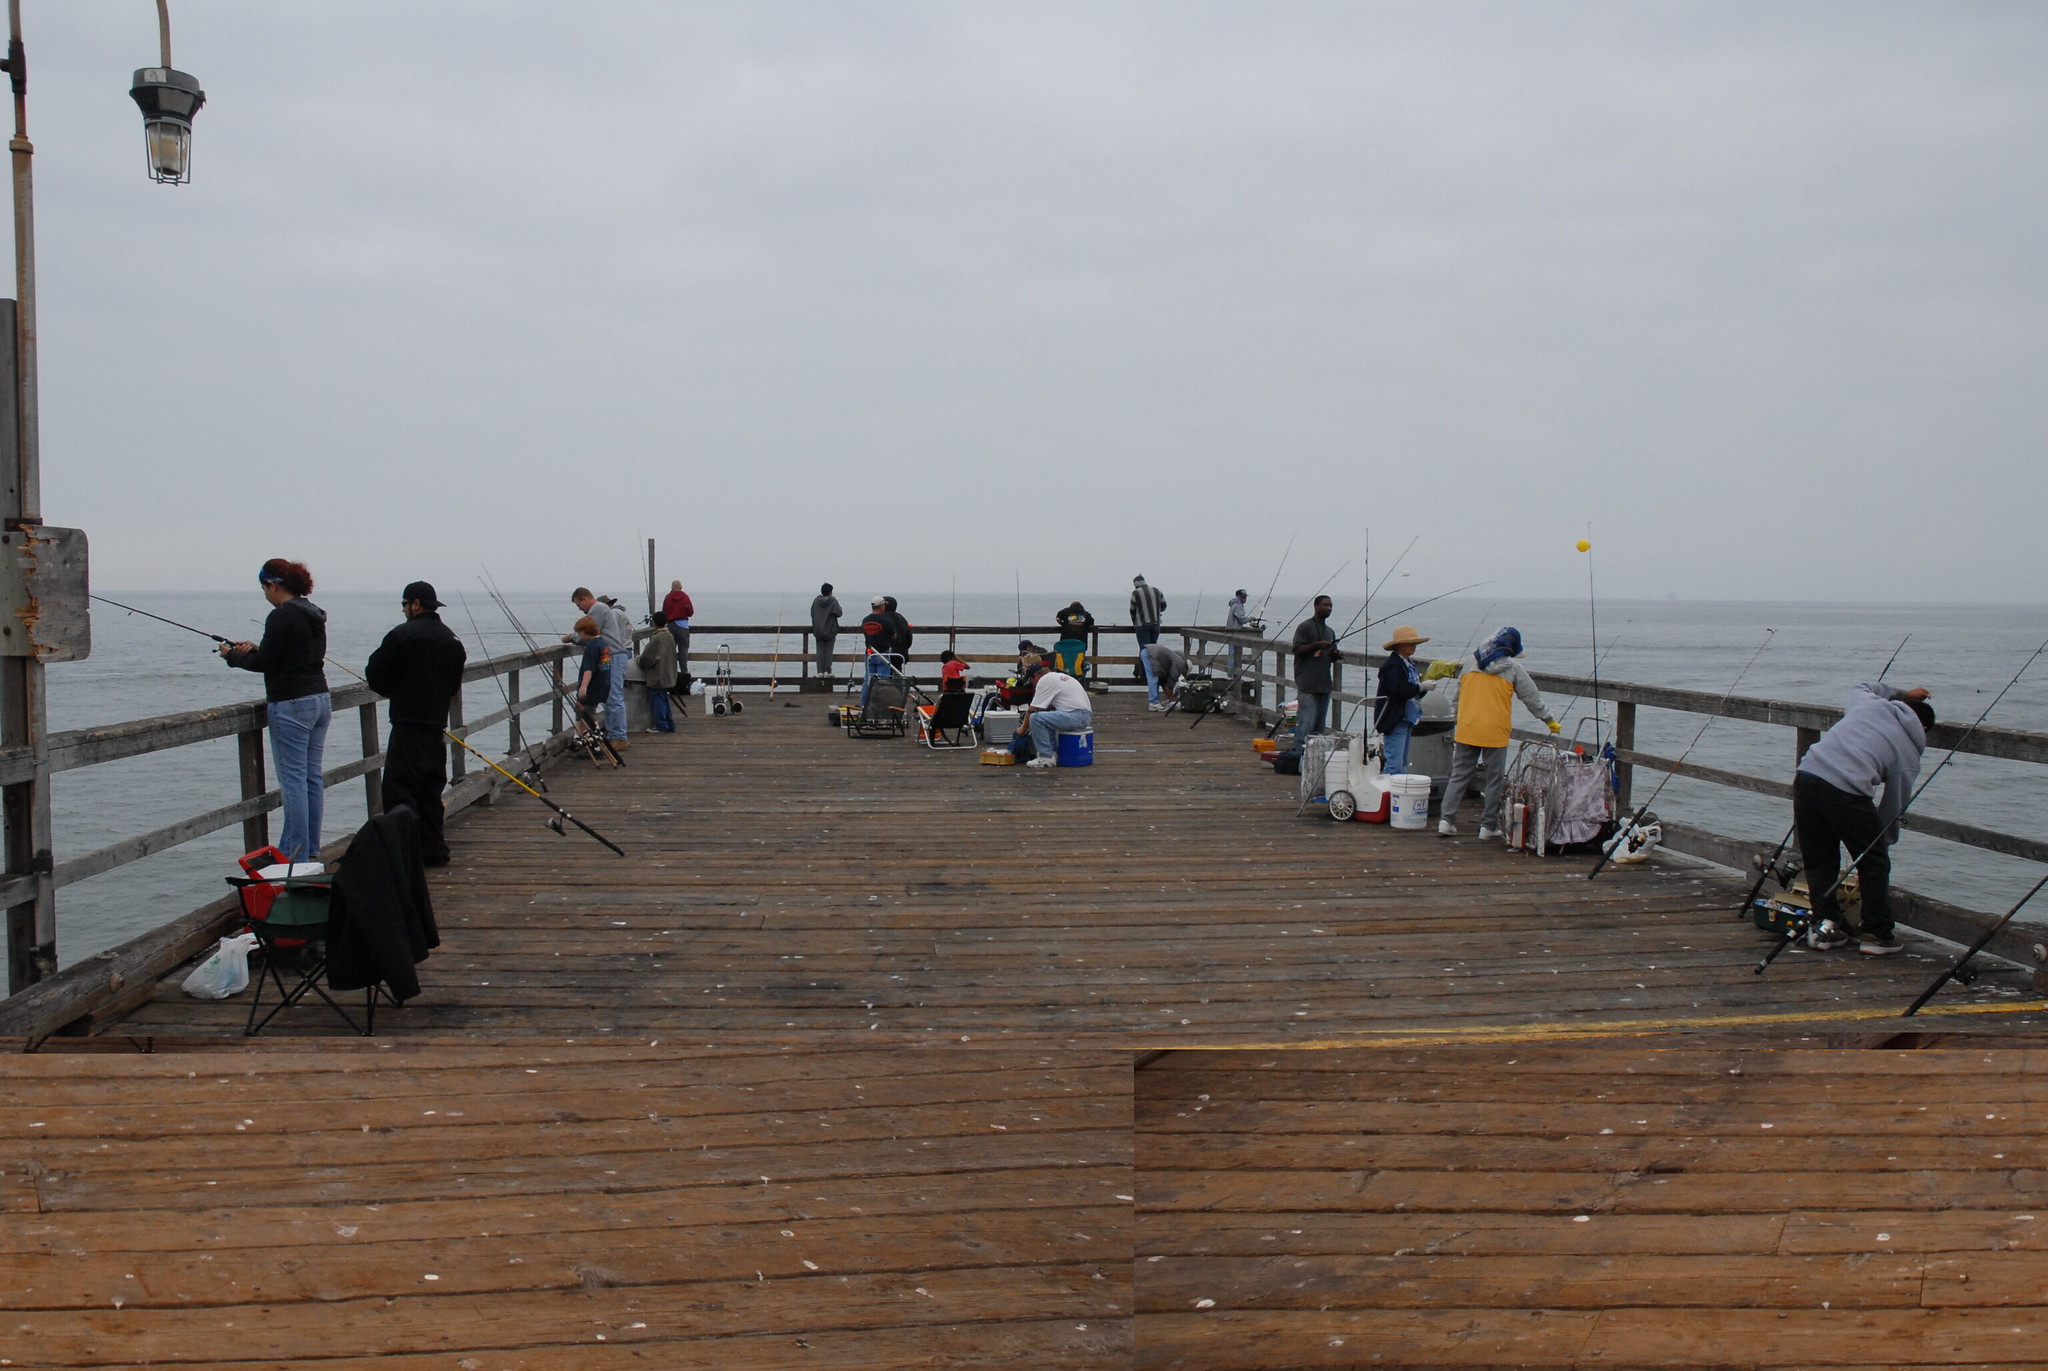 Anglers on the Santa Monica pier